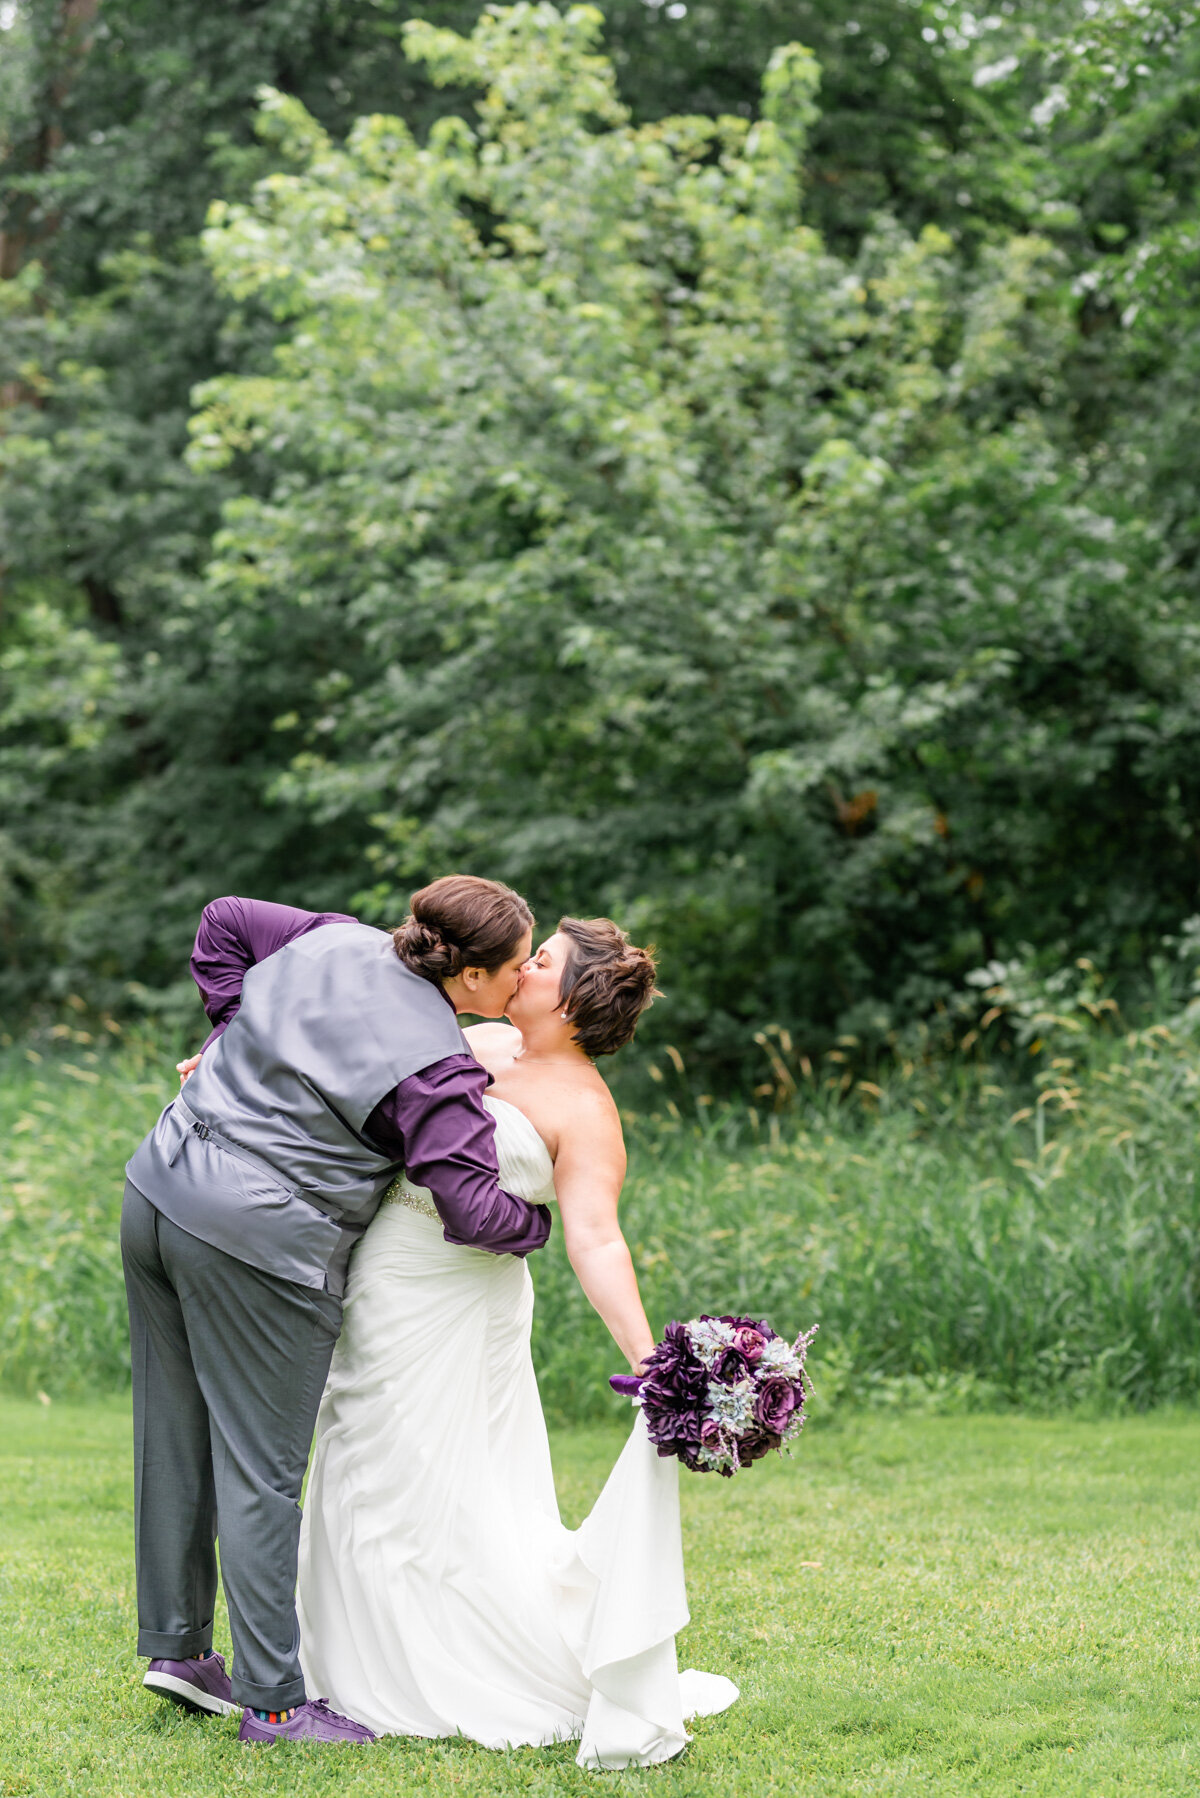 Summer Fargo Wedding Photography in Lindenwood Park | Chelsea Joy Photography